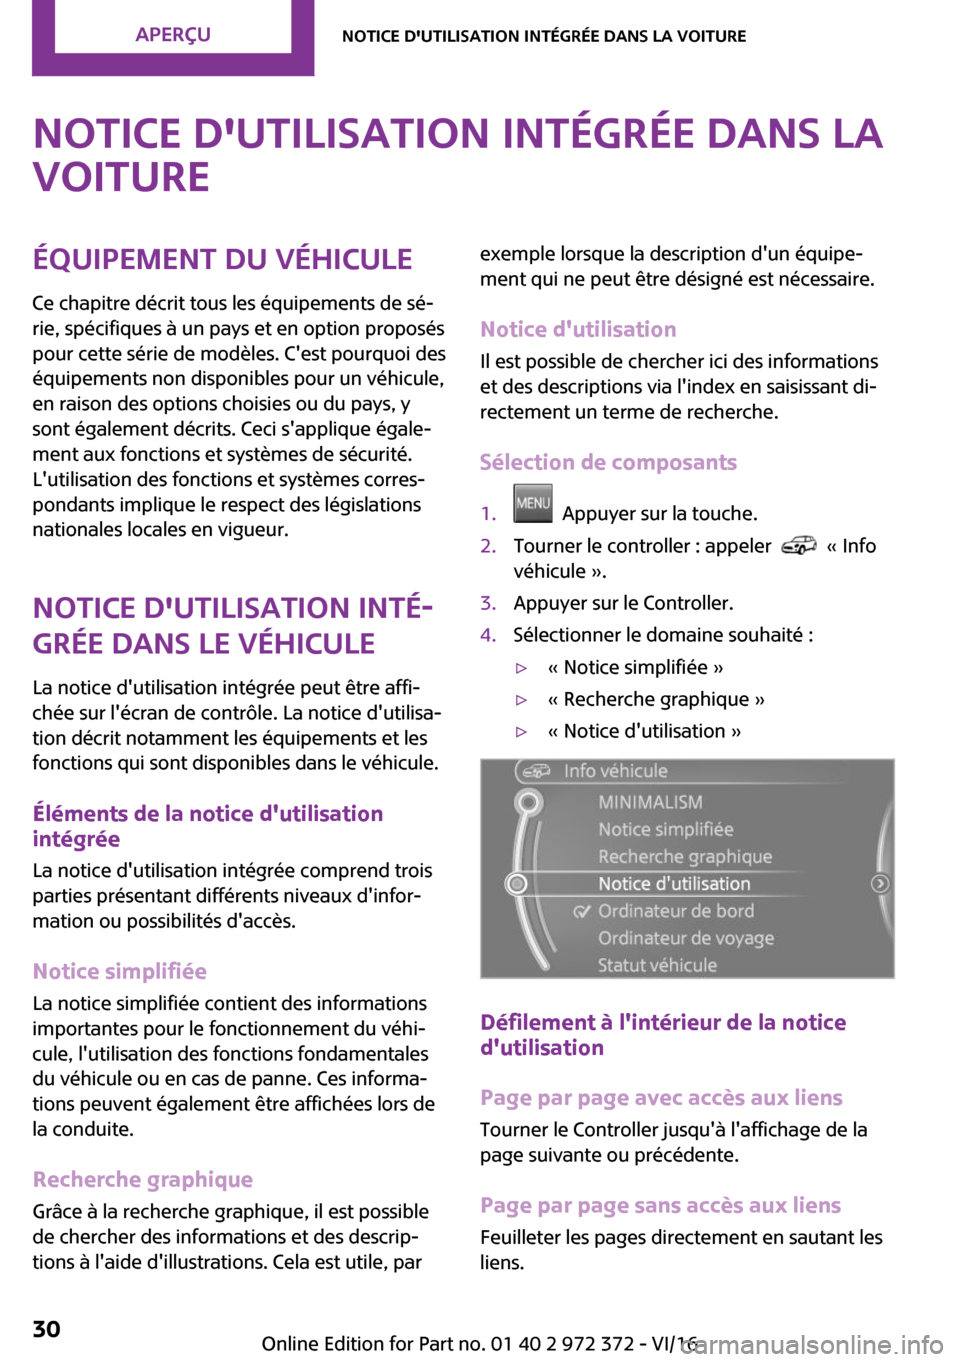 MINI Convertible 2016  Manuel du propriétaire (in French) �N�o�t�i�c�e��d��u�t�i�l�i�s�a�t�i�o�n��i�n�t�é�g�r�é�e��d�a�n�s��l�a
�v�o�i�t�u�r�e�